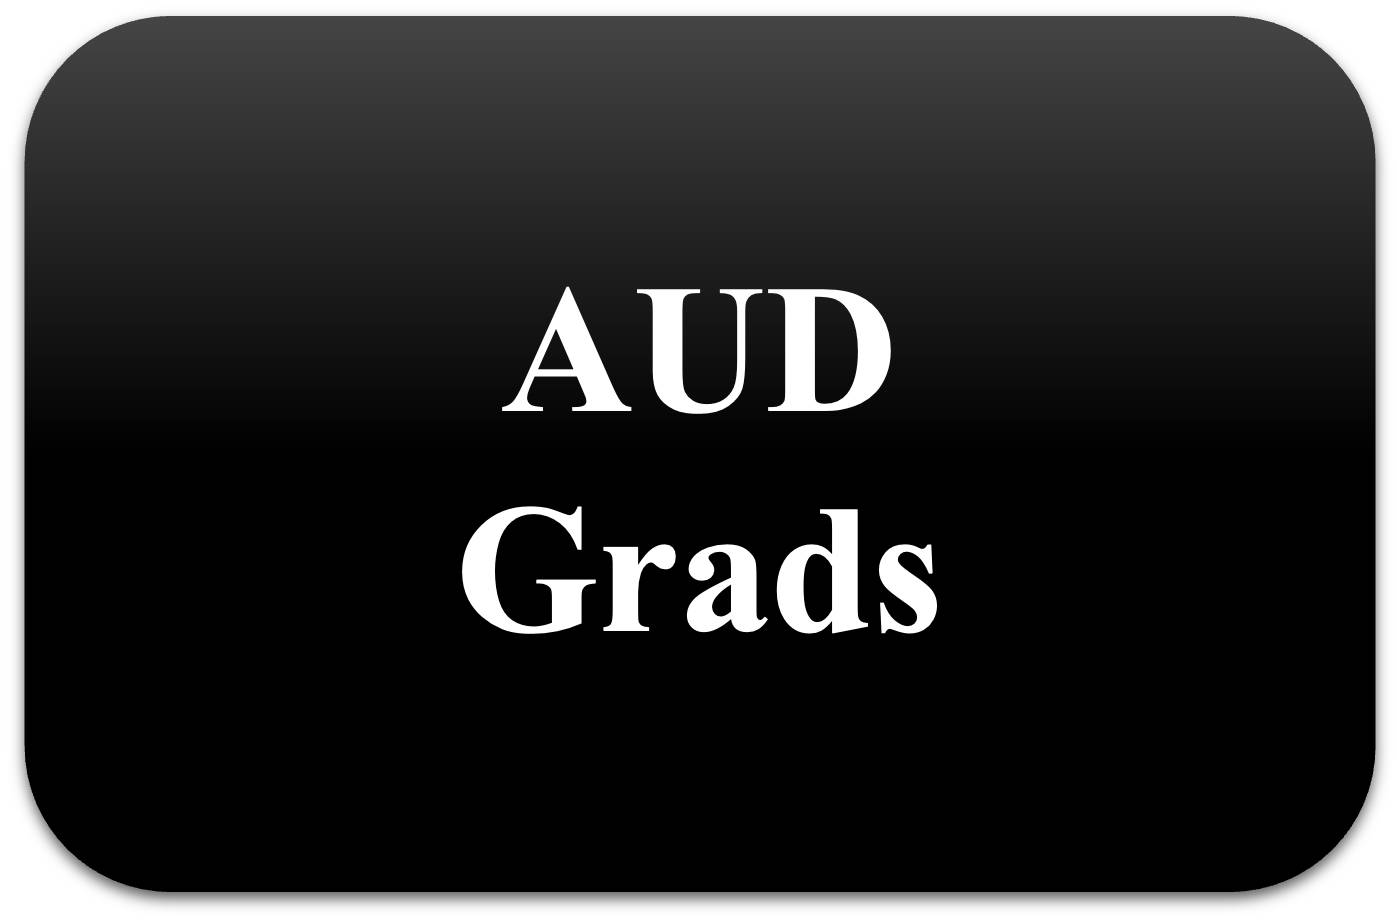 NSSLHA Chapter - AUD Grads